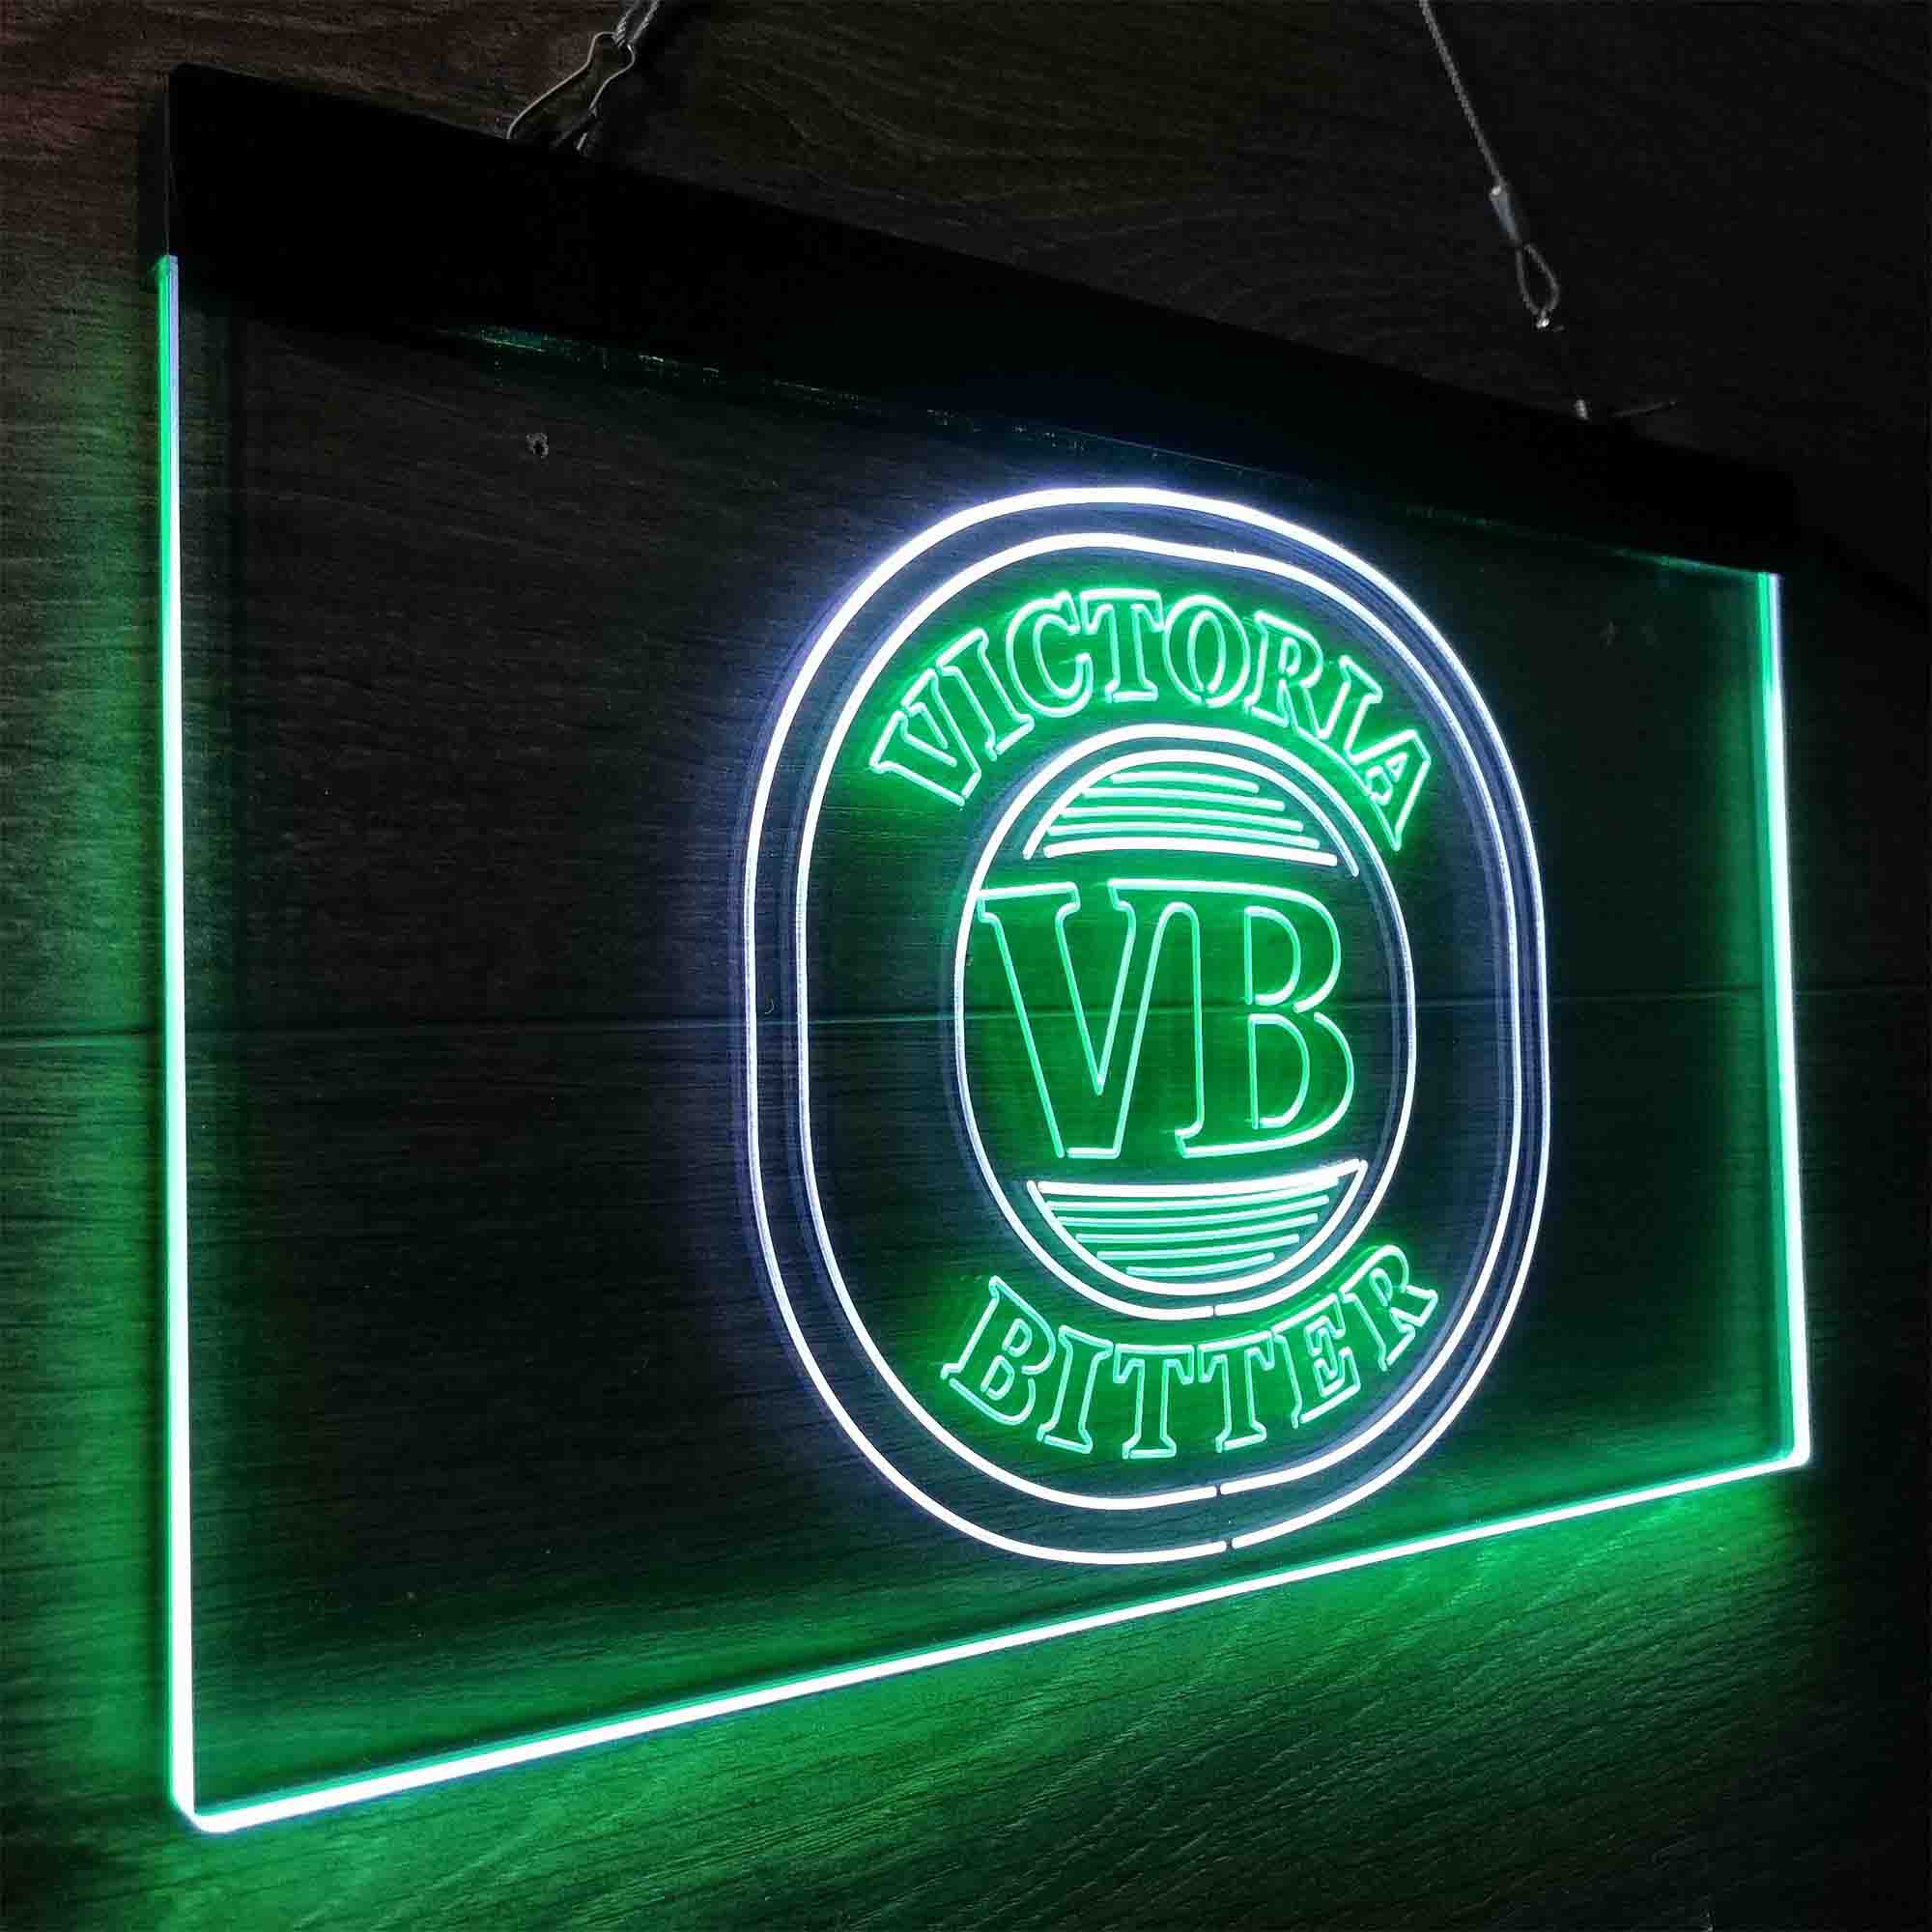 Victoria Bitter VB Beer Neon-Like LED Sign